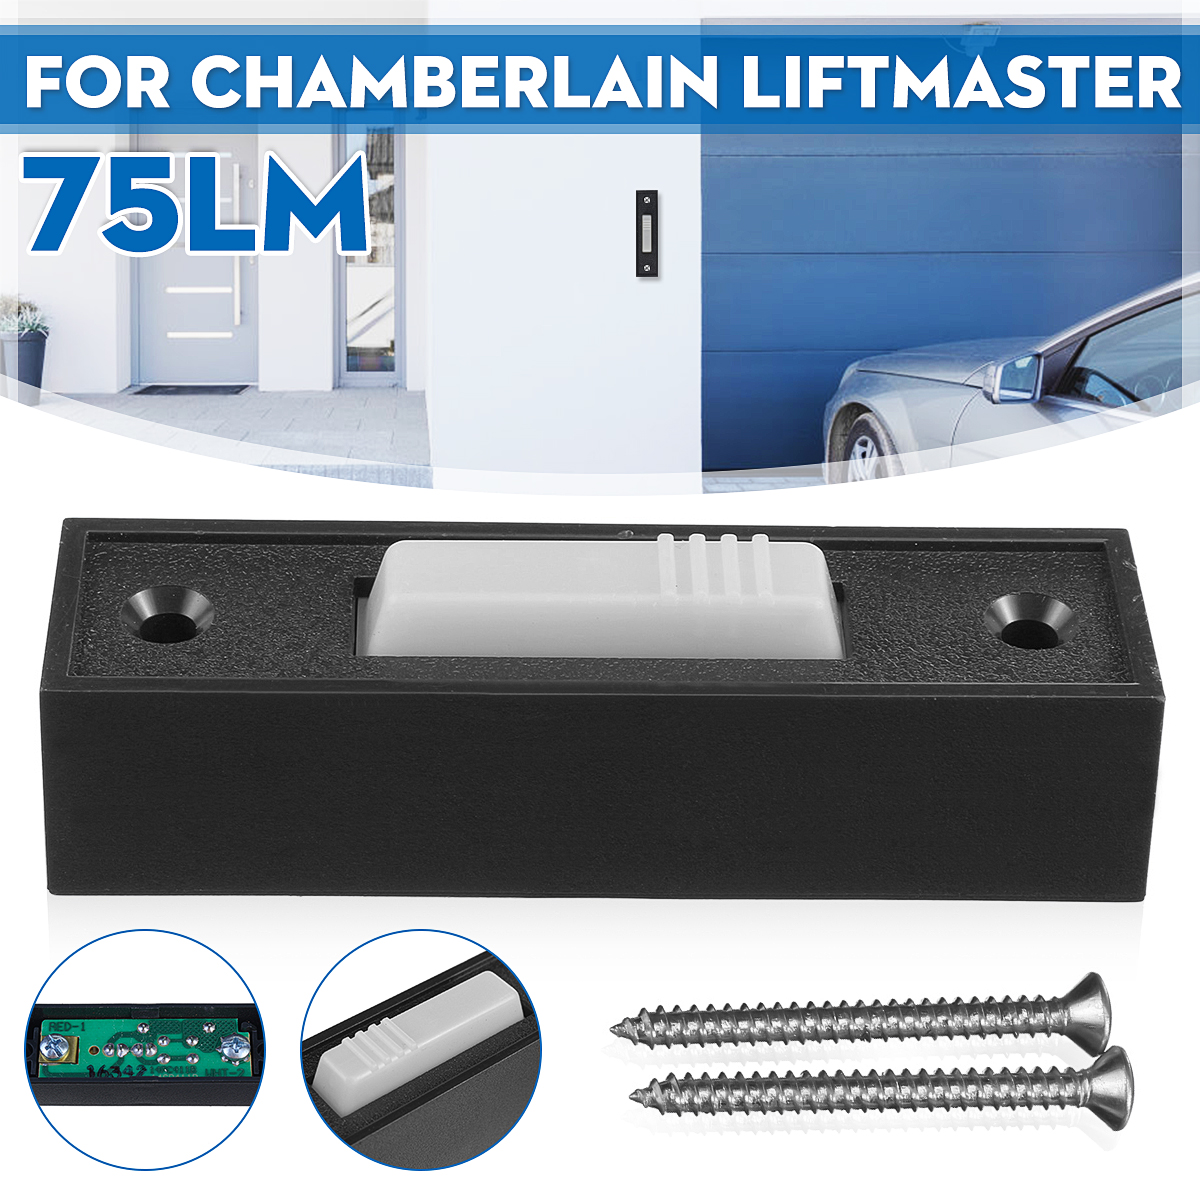 75LM-Illuminated-Garage-Door-Opener-Wall-Control-Push-Button-For-Chamberlain-LiftMaster-1738245-1